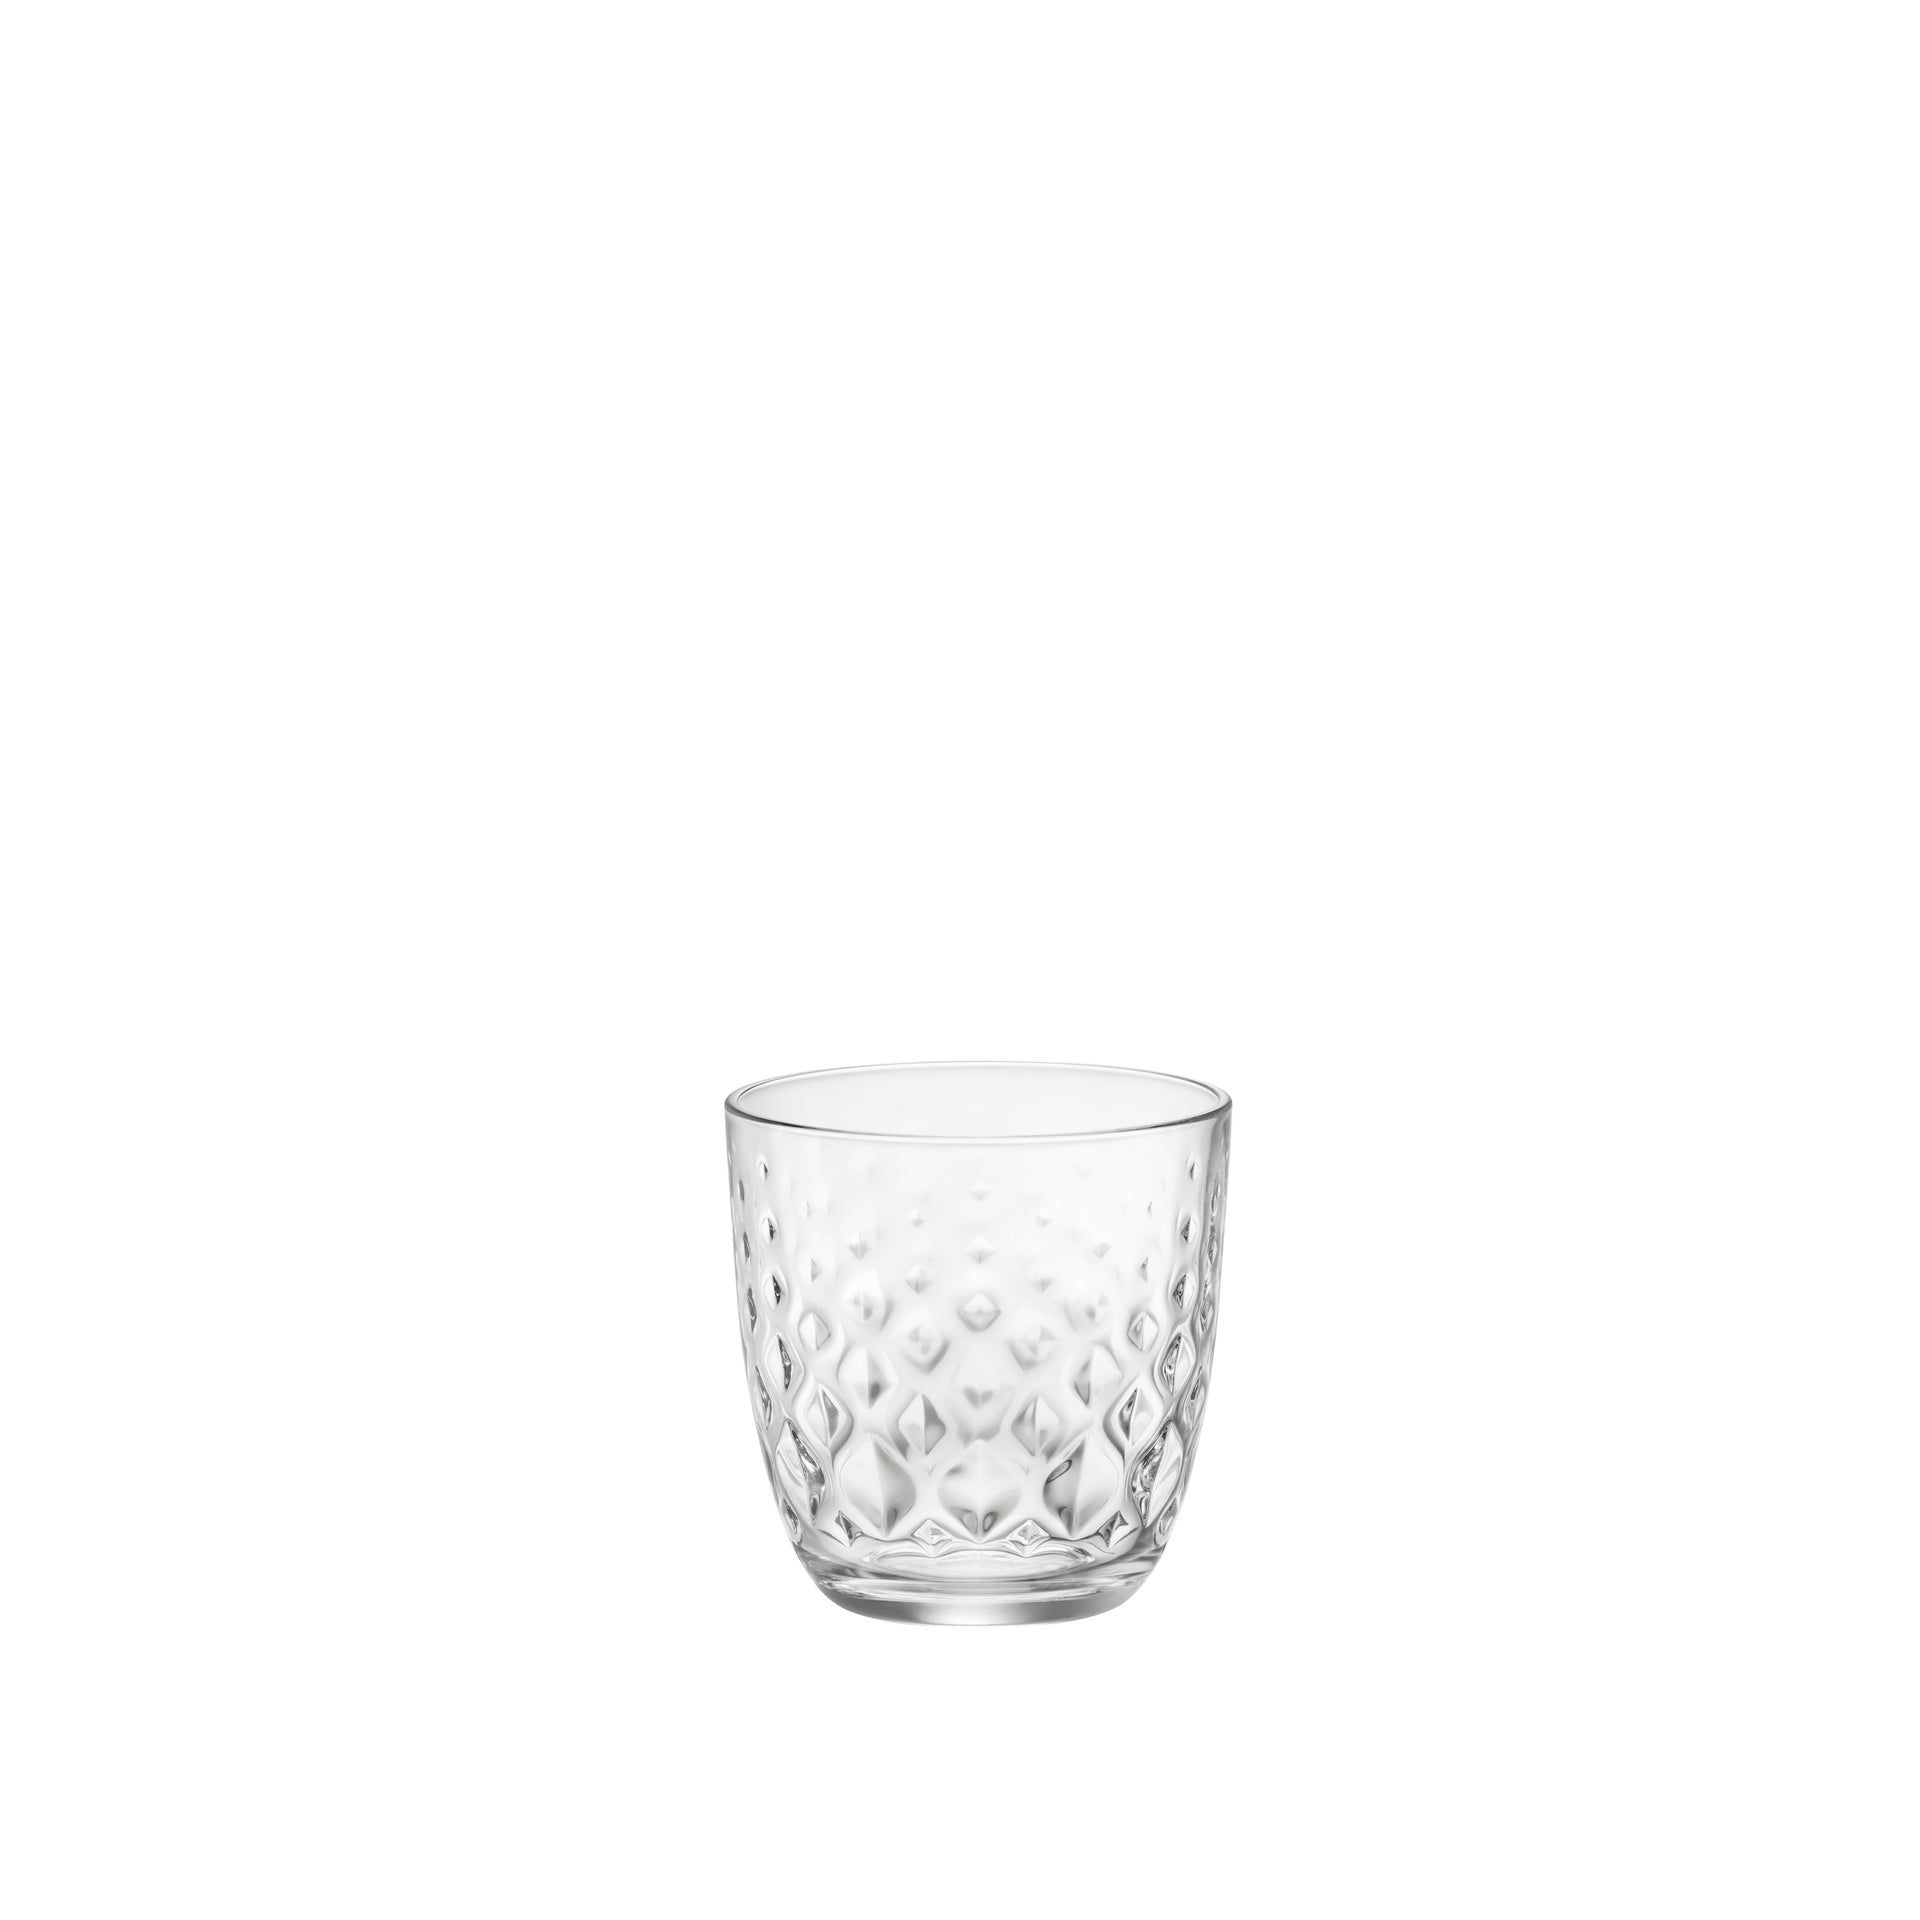 Glit 10 oz. Water Drinking Glasses (Set of 6)